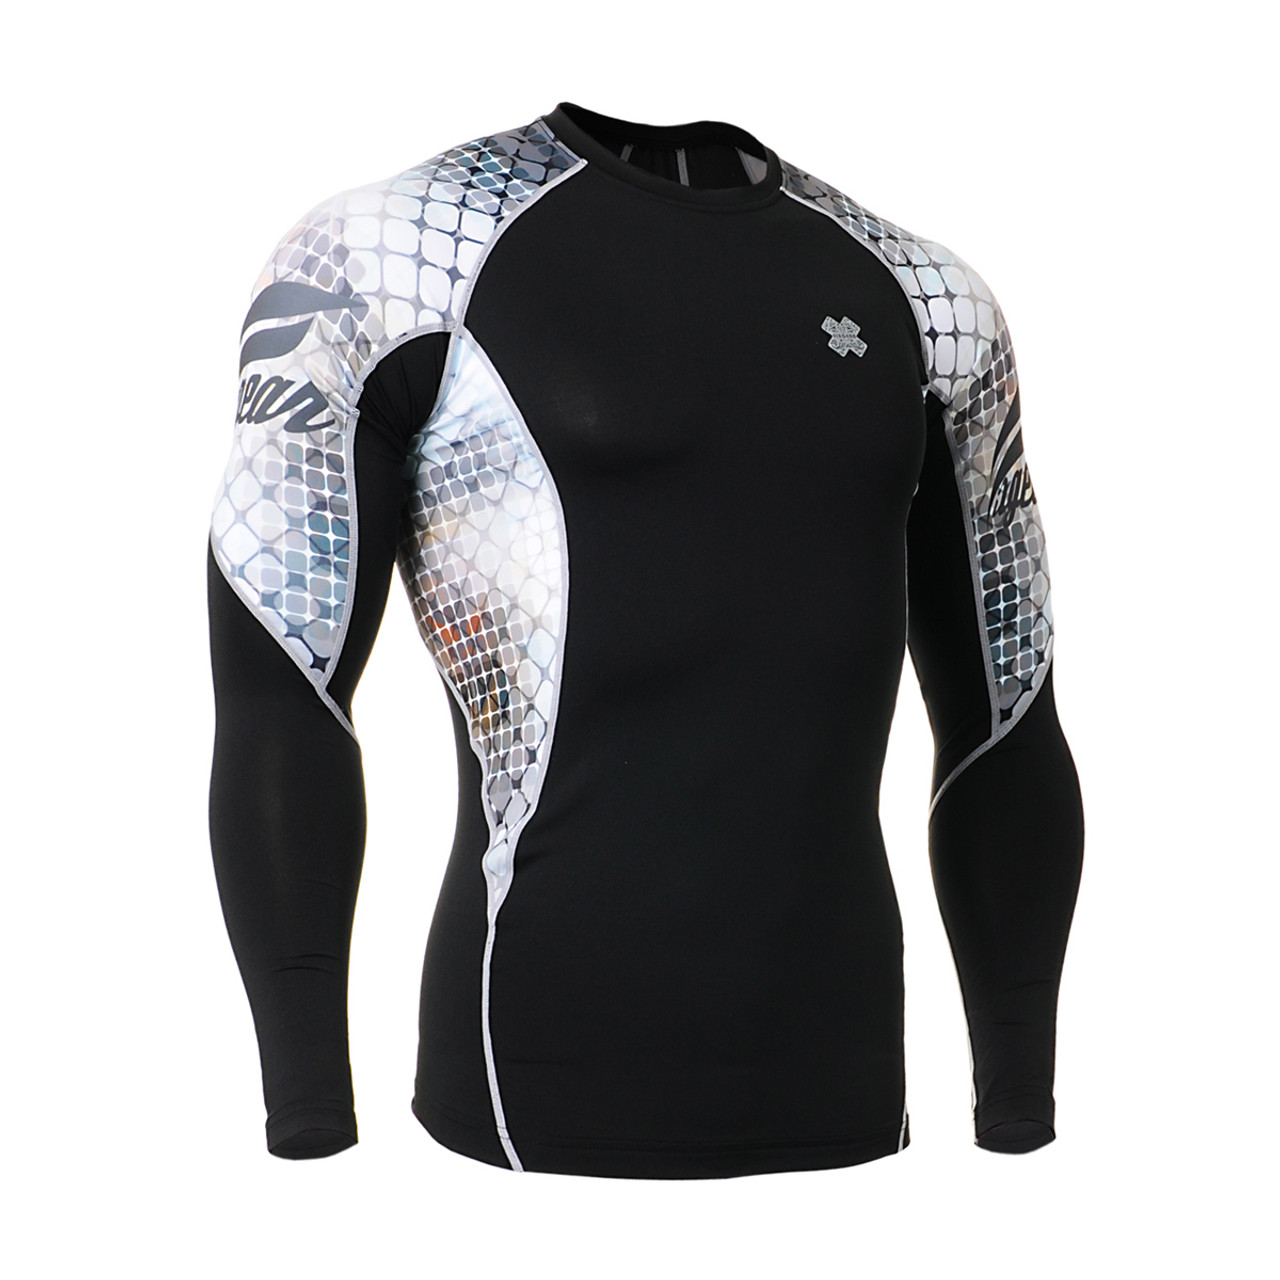 FIXGEAR C2L-B38 Skin tights Compression Base Layer Long Sleeve Shirts